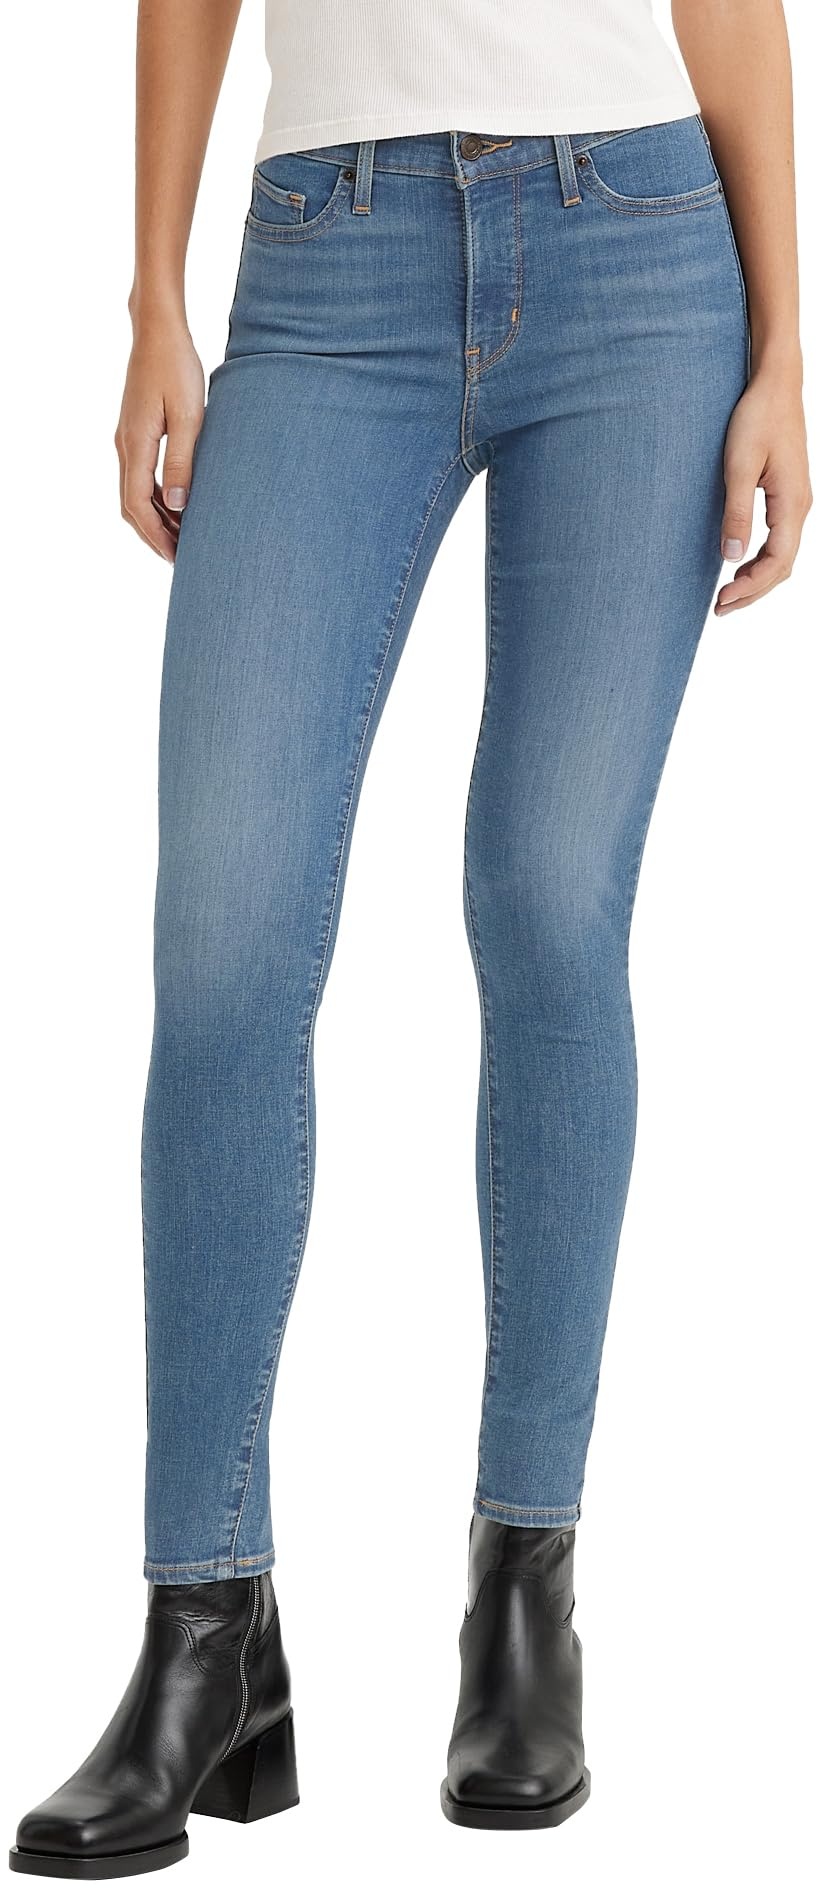 Bild von Levi's Damen 310 Shaping Super Skinny Jeans, Quebec Lake, 28W /